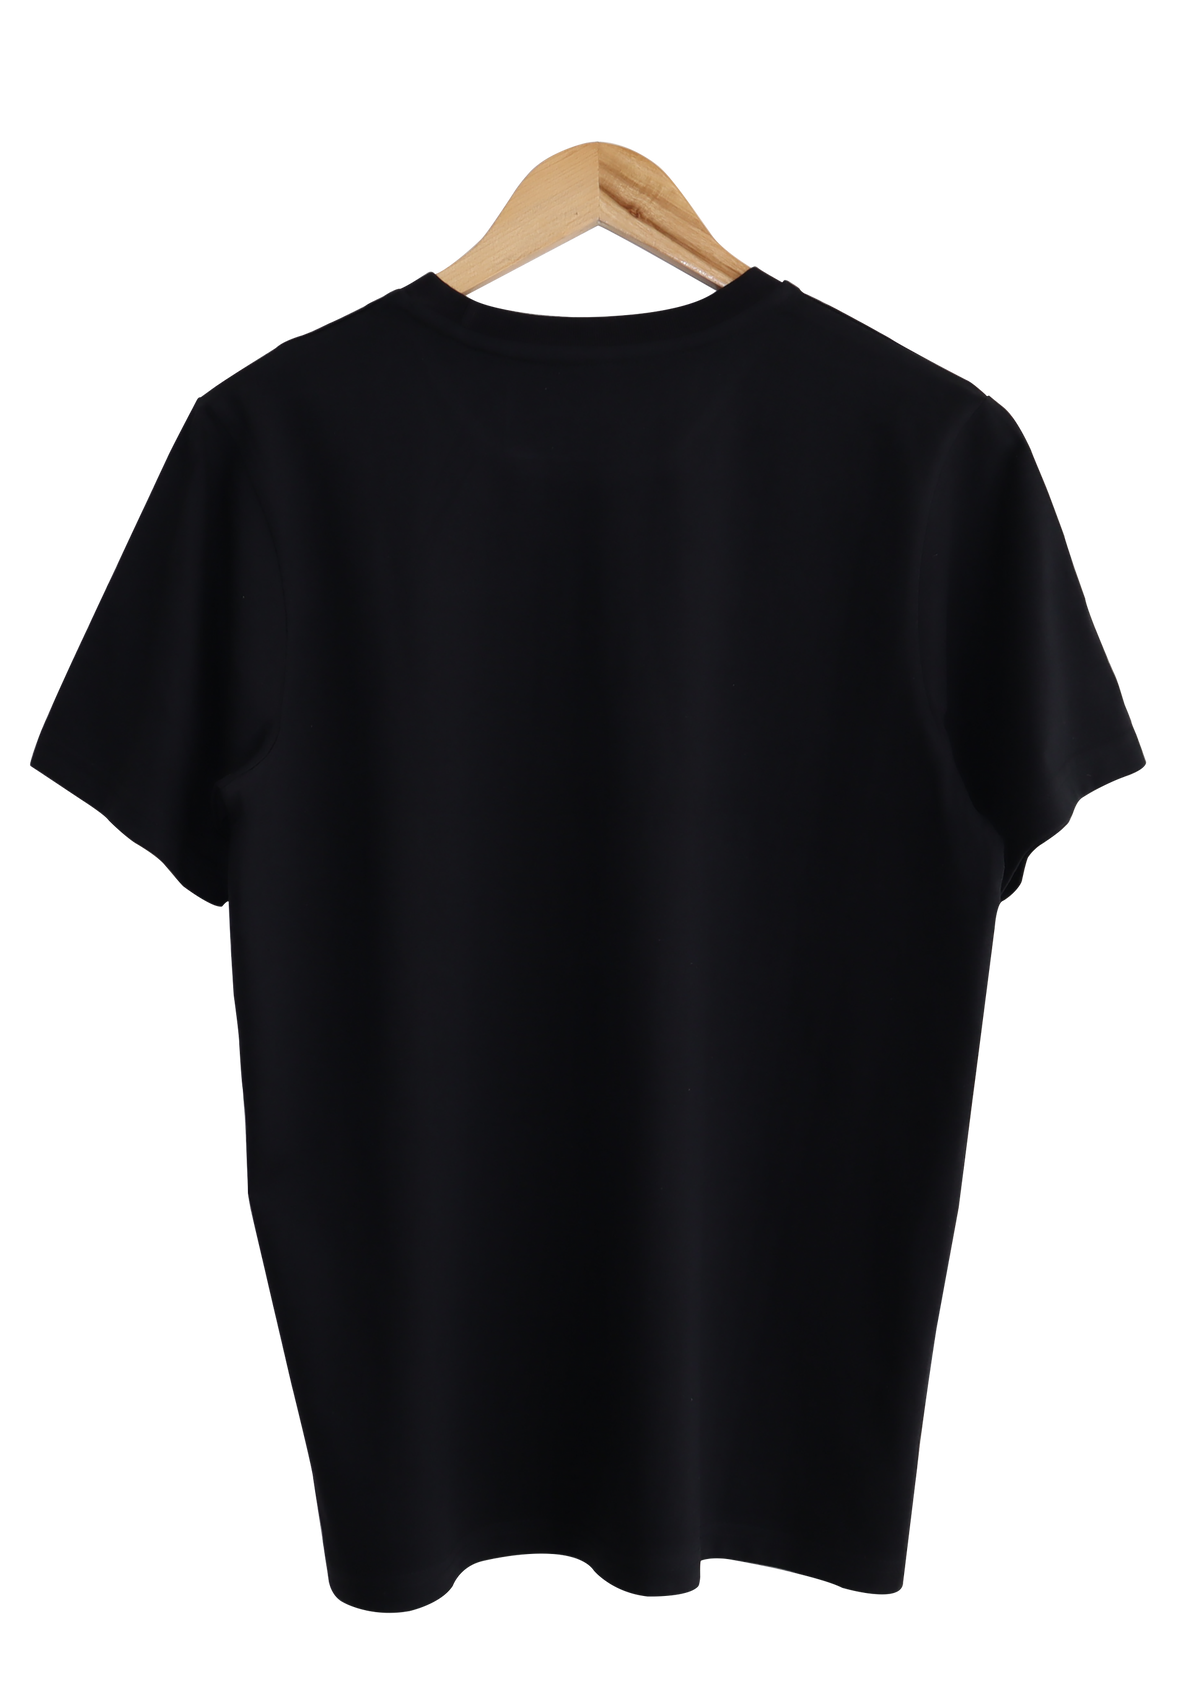 IRONPANDA -Half Sleeve Cotton Tshirt